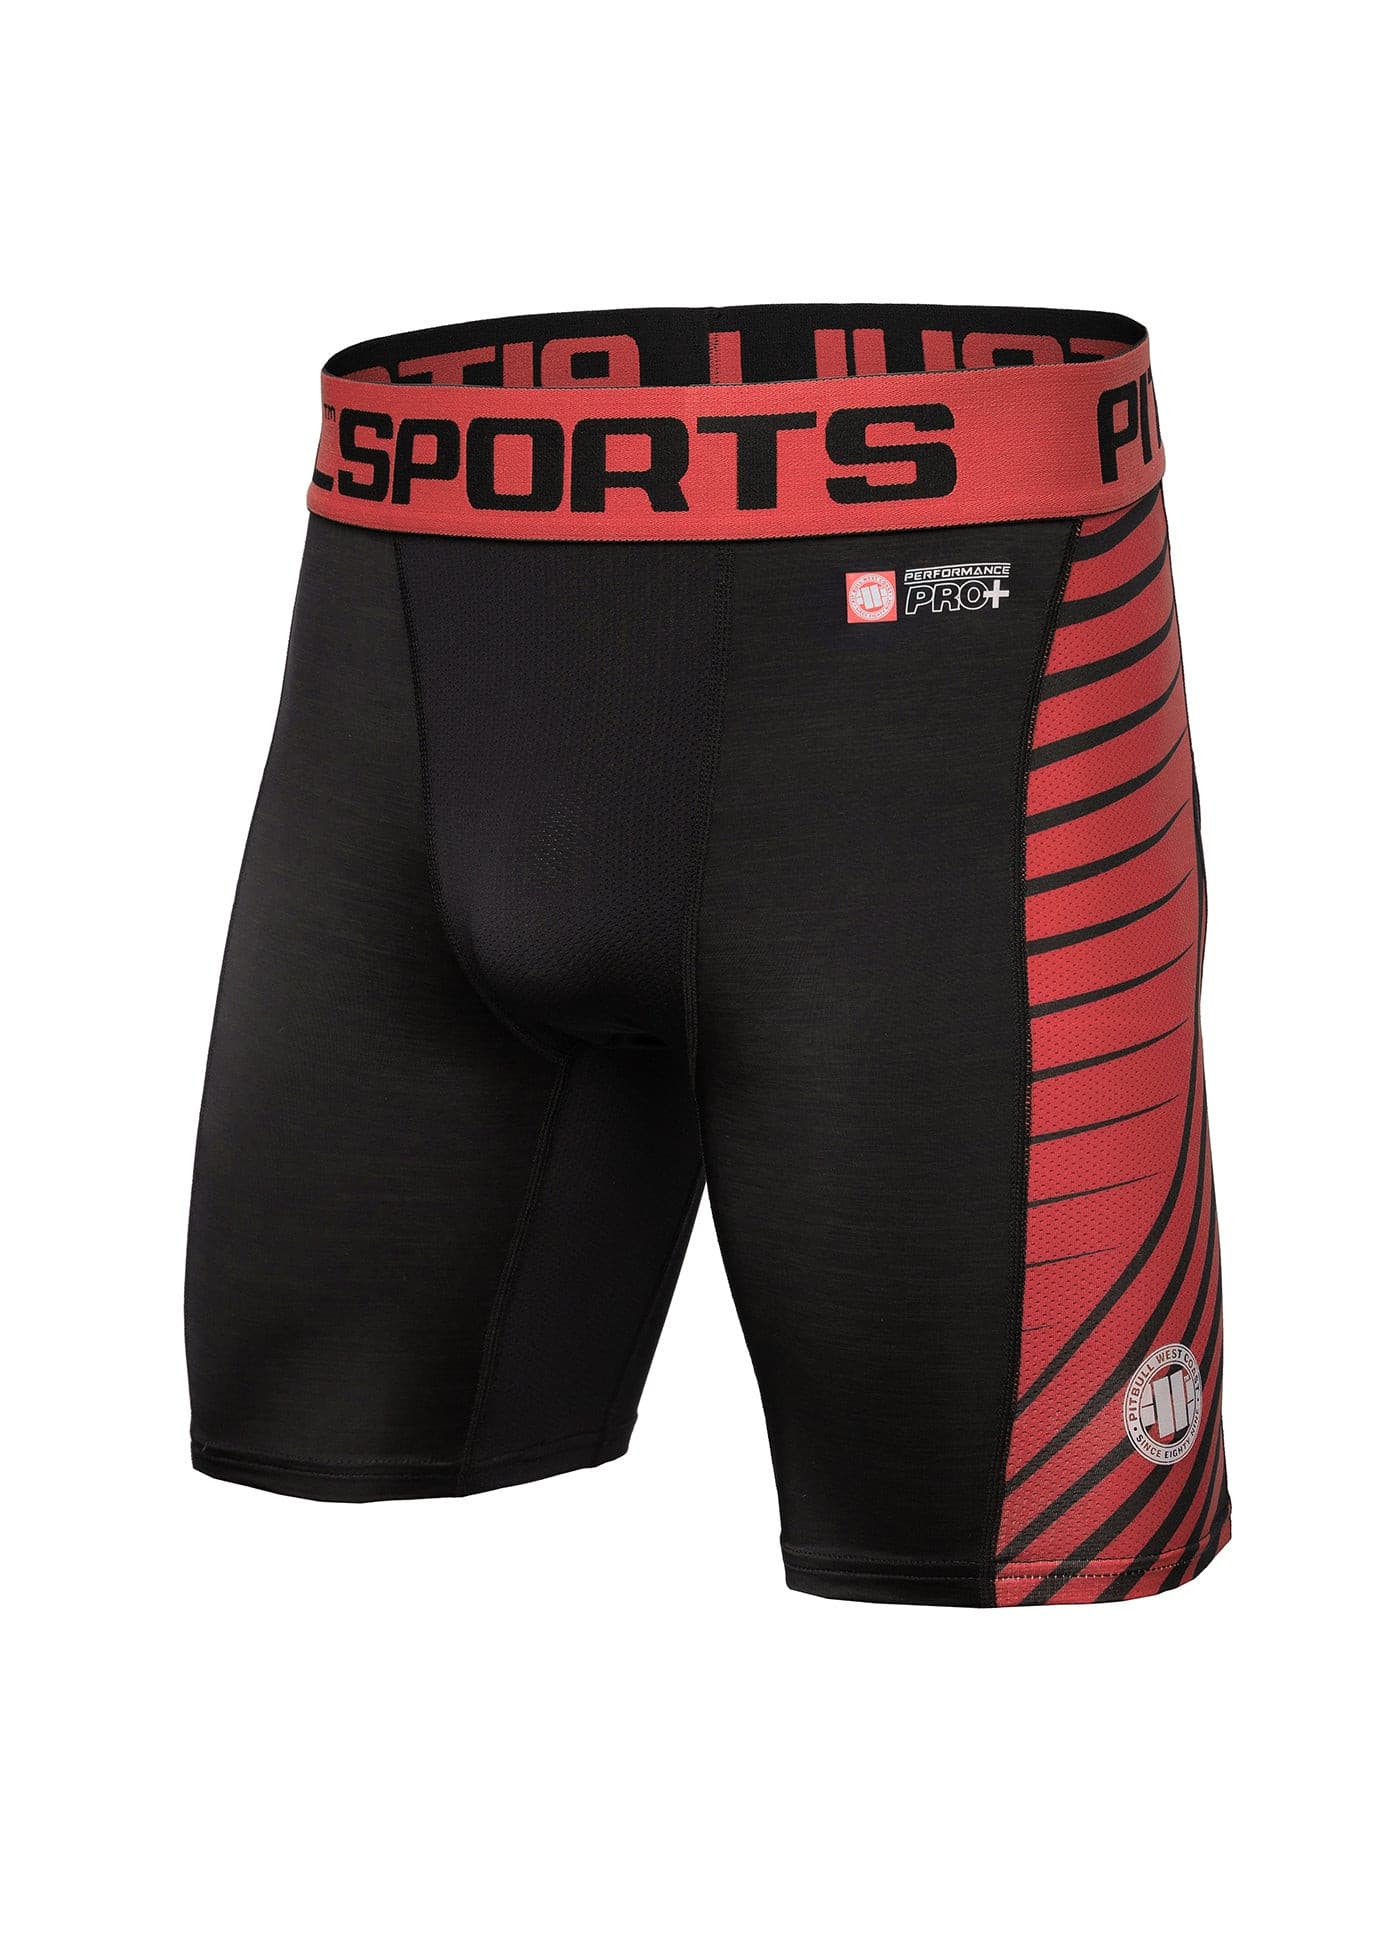 PRO PLUS Red Compression Shorts - Pitbull Clothing